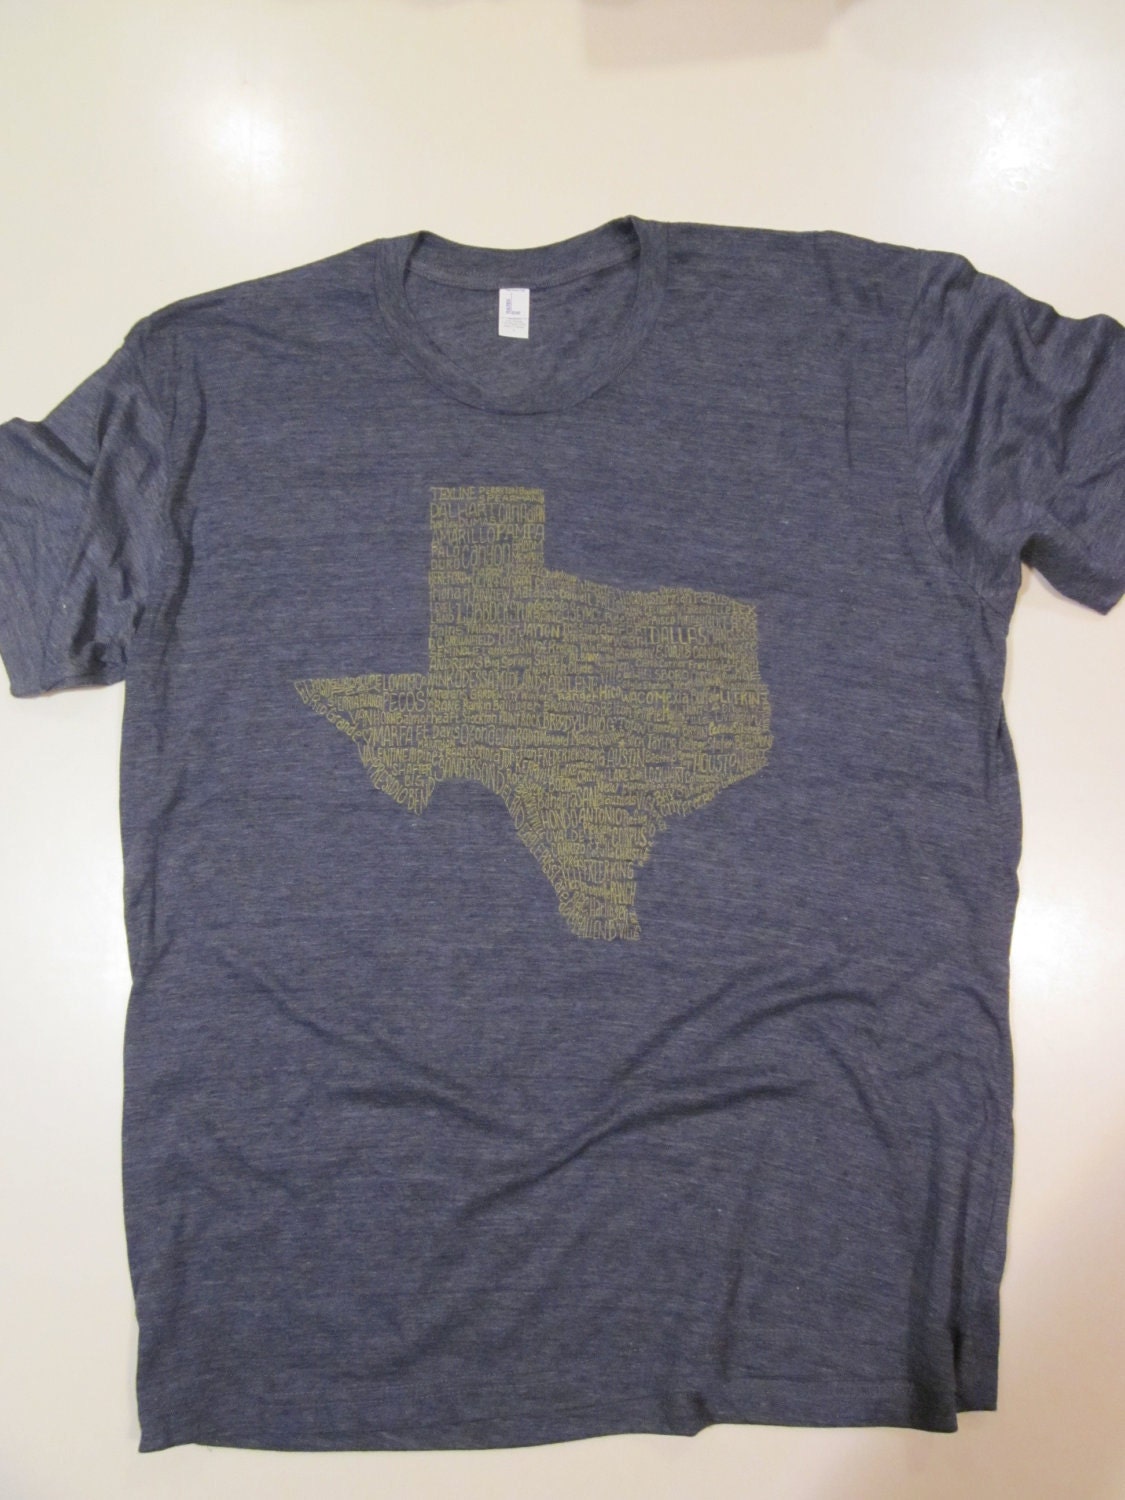 Texas City T-shirt  -   "I've Been Everywhere" - Navy Blue Heather Blend